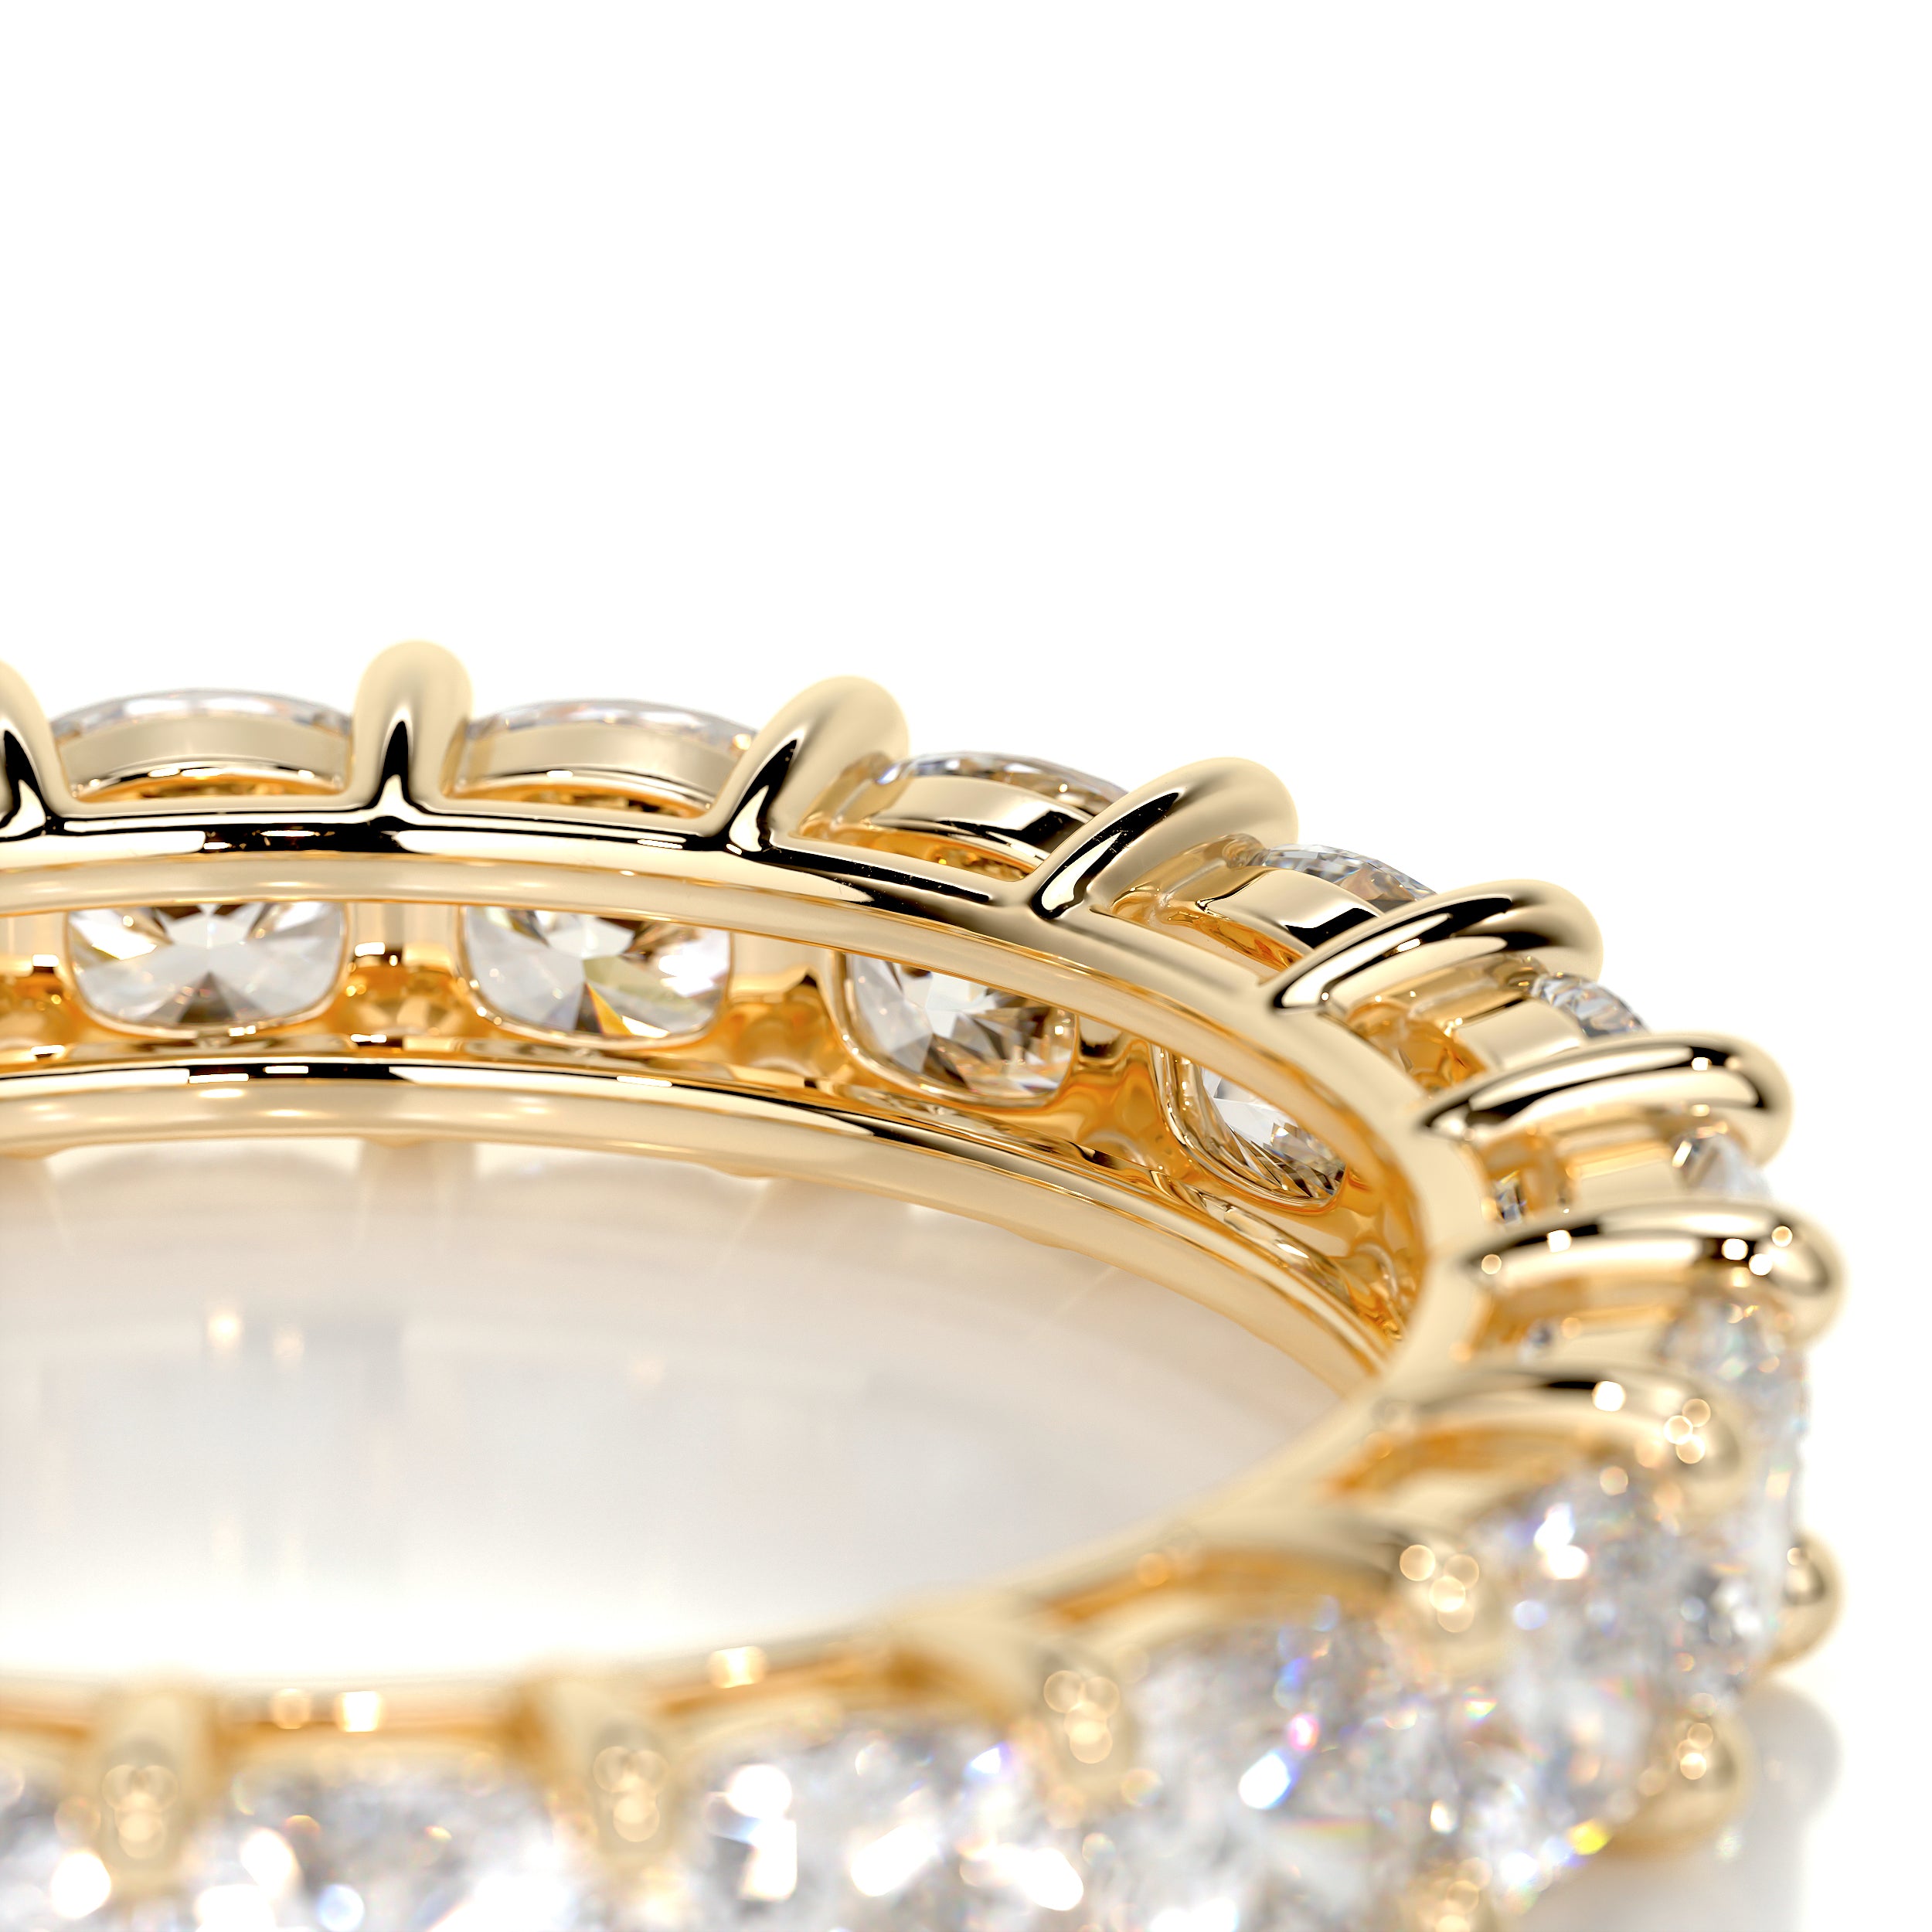 Dianna Diamond Wedding Ring   (3 Carat) -18K Yellow Gold